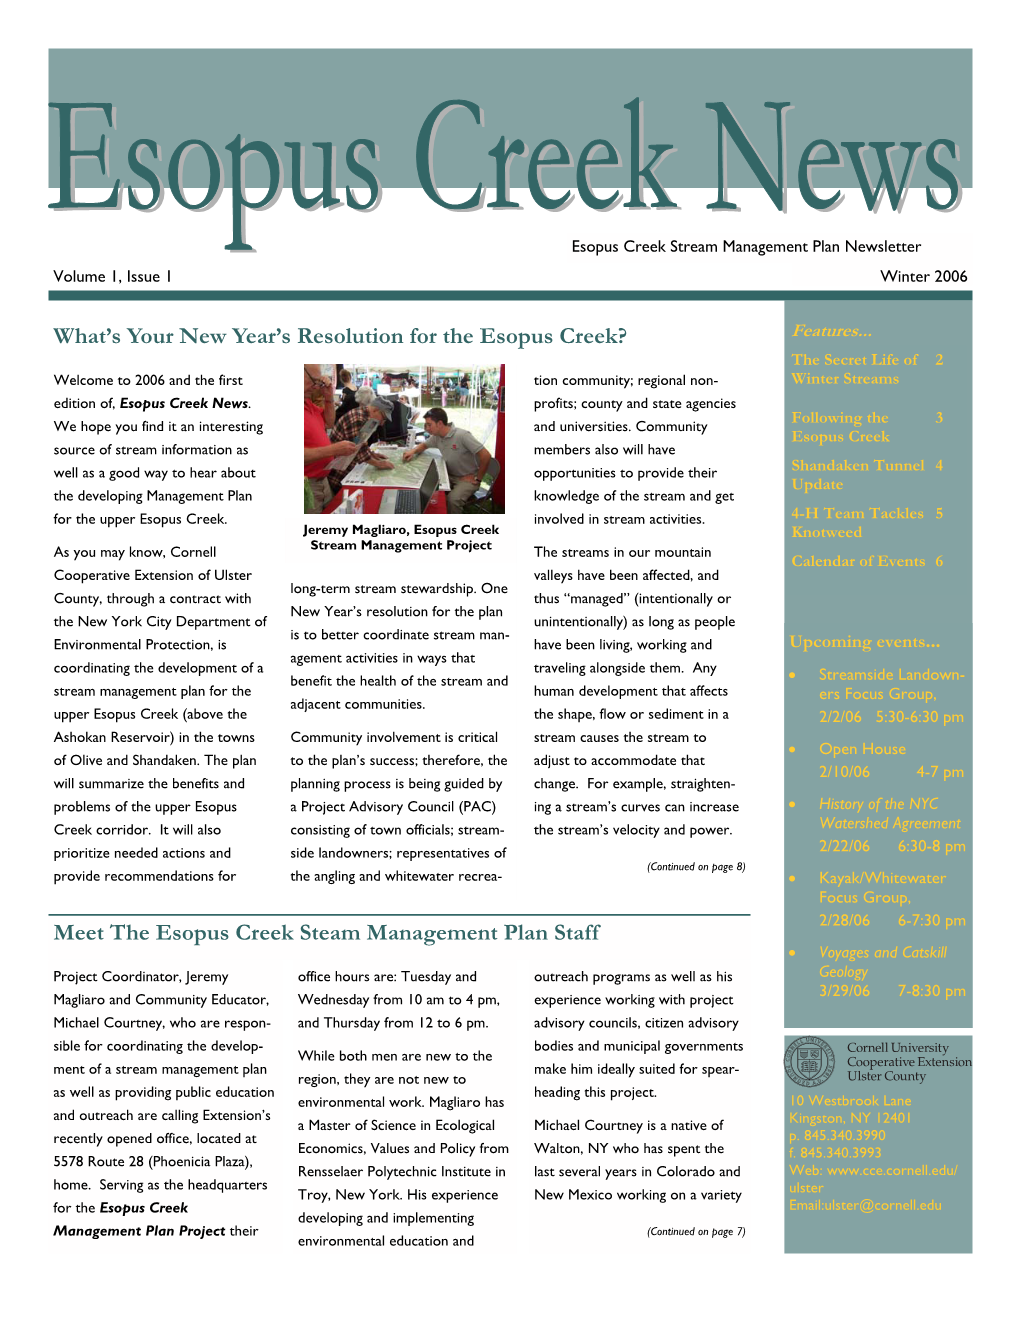 Esopus Creek News 2006 Winter